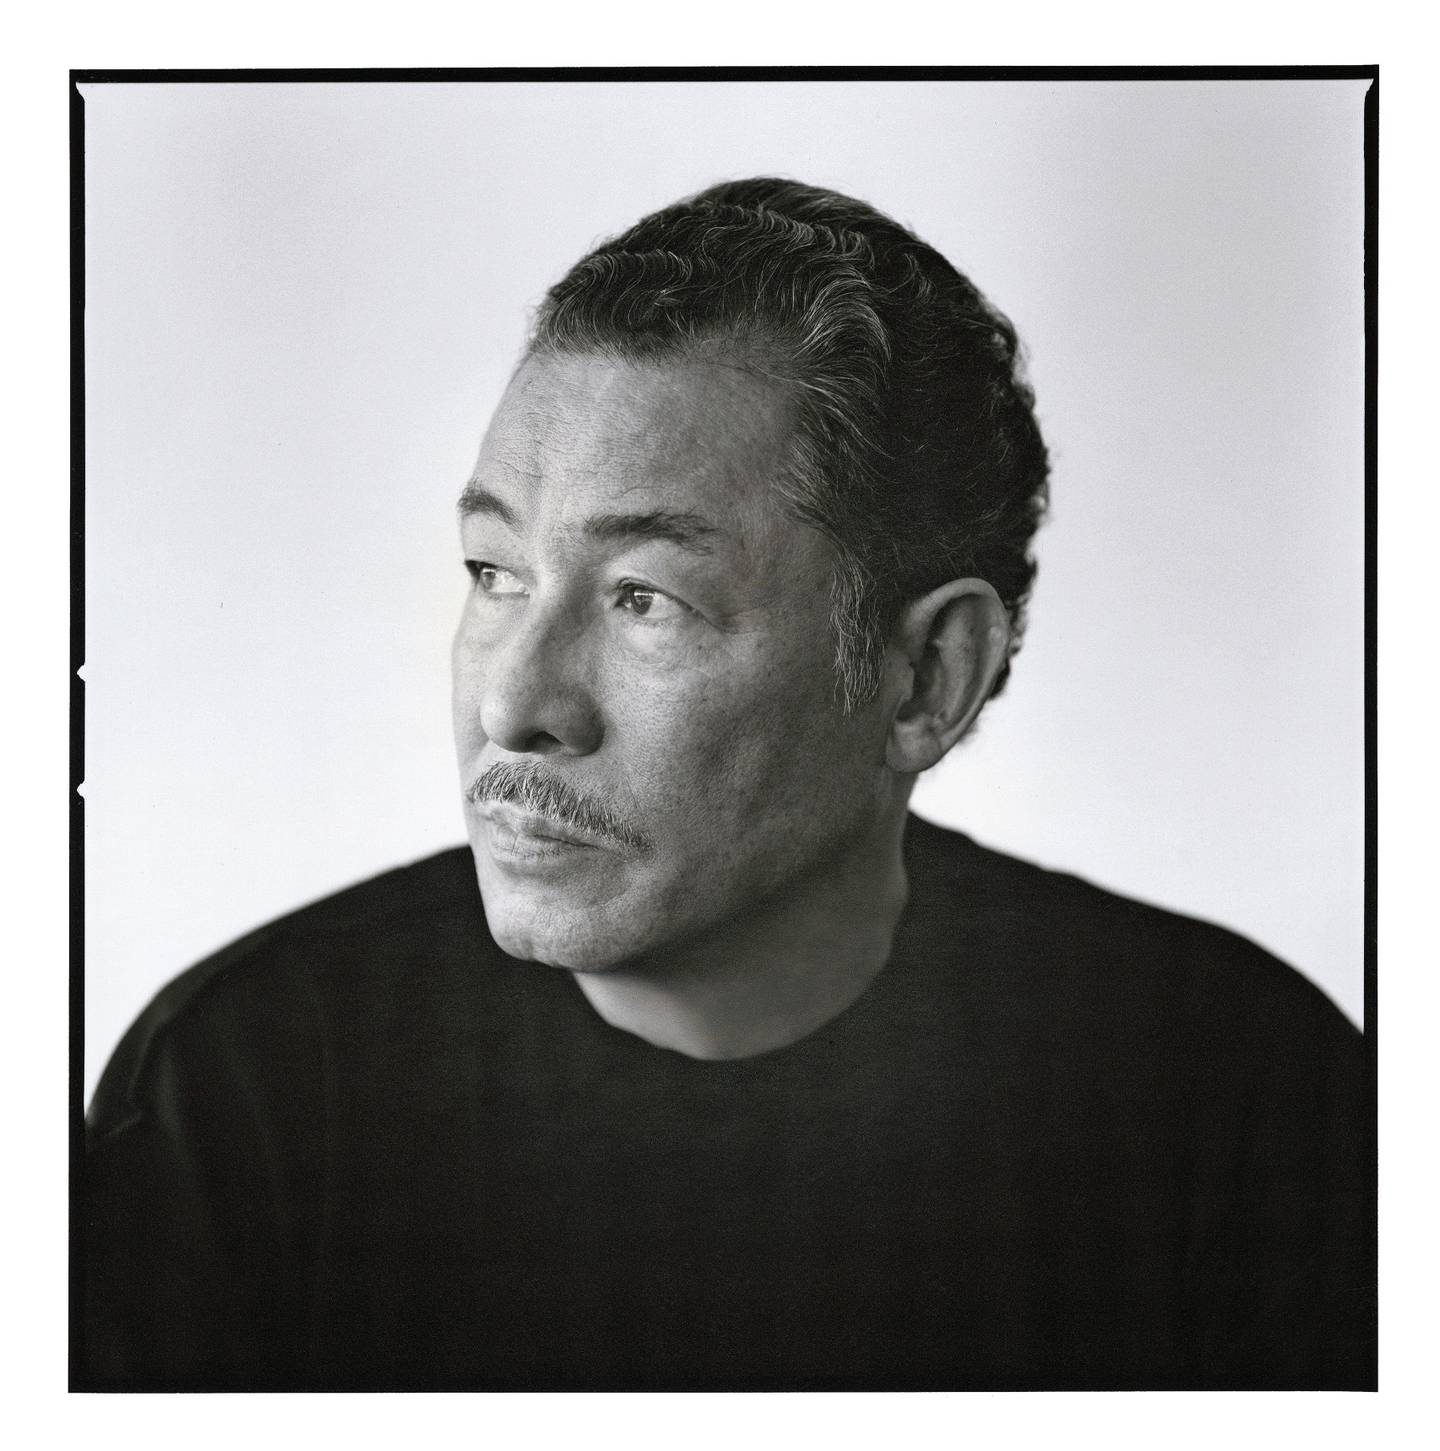 Black and white portrait of Issey Miyake